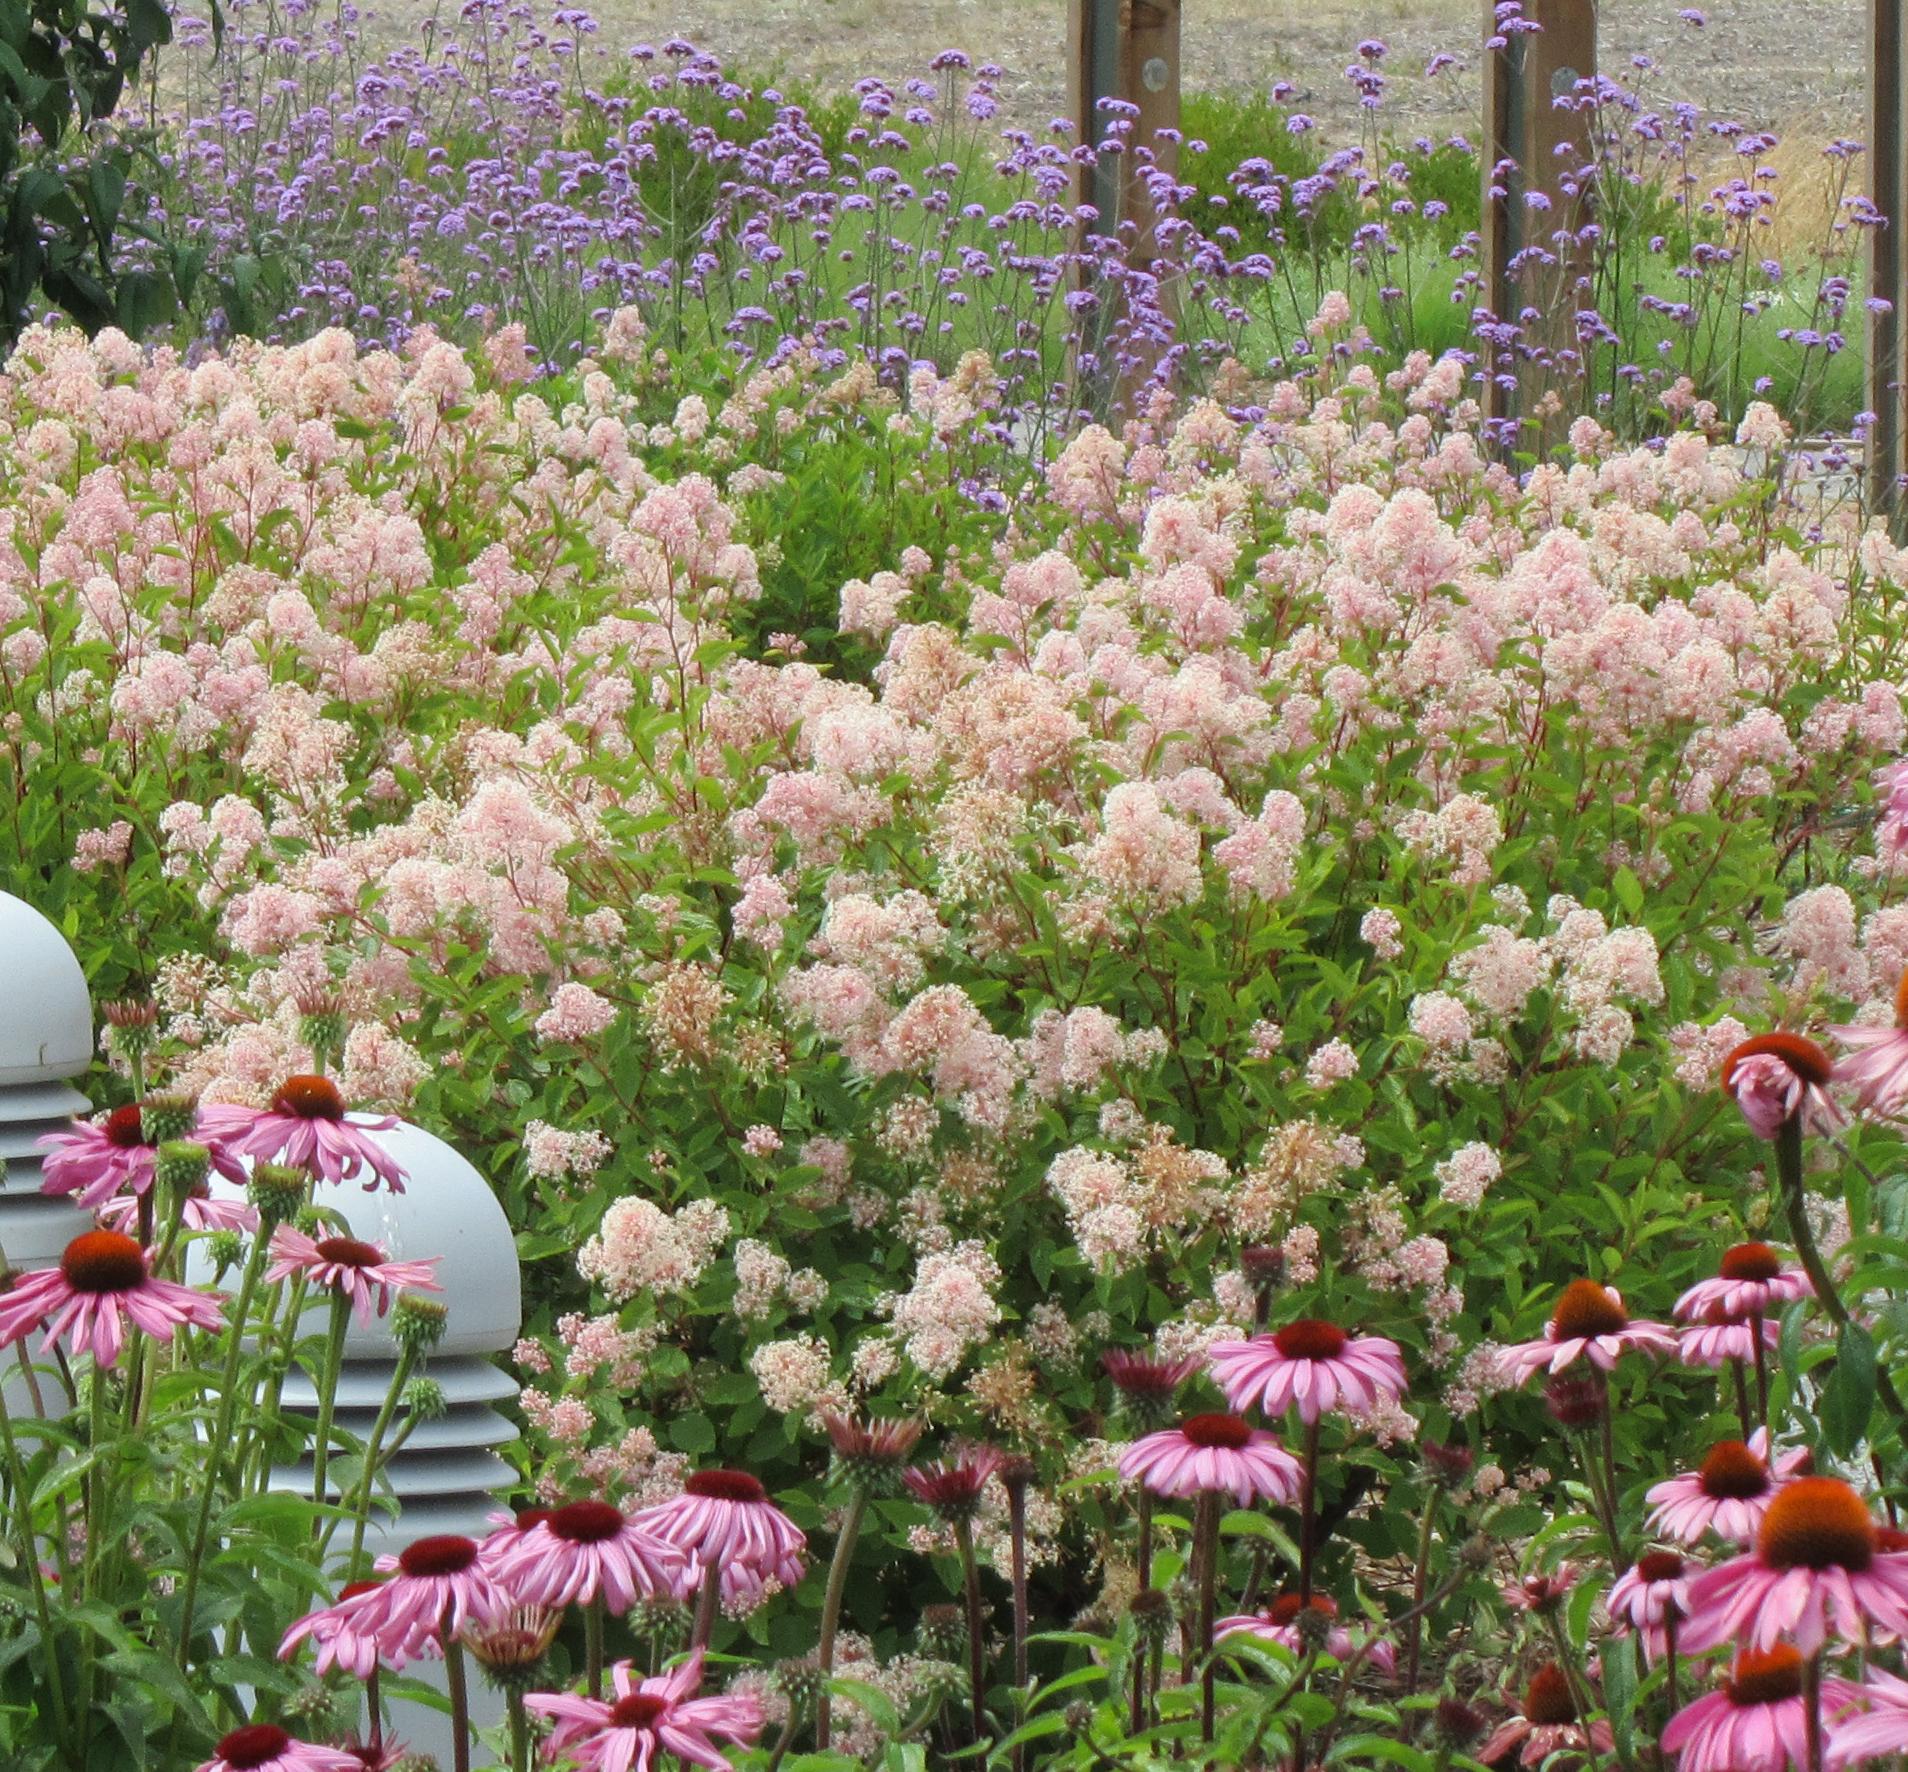 Marie Simon ceanothus with Echinacea and Verbena in a garden setting. Photo: SK Reid.